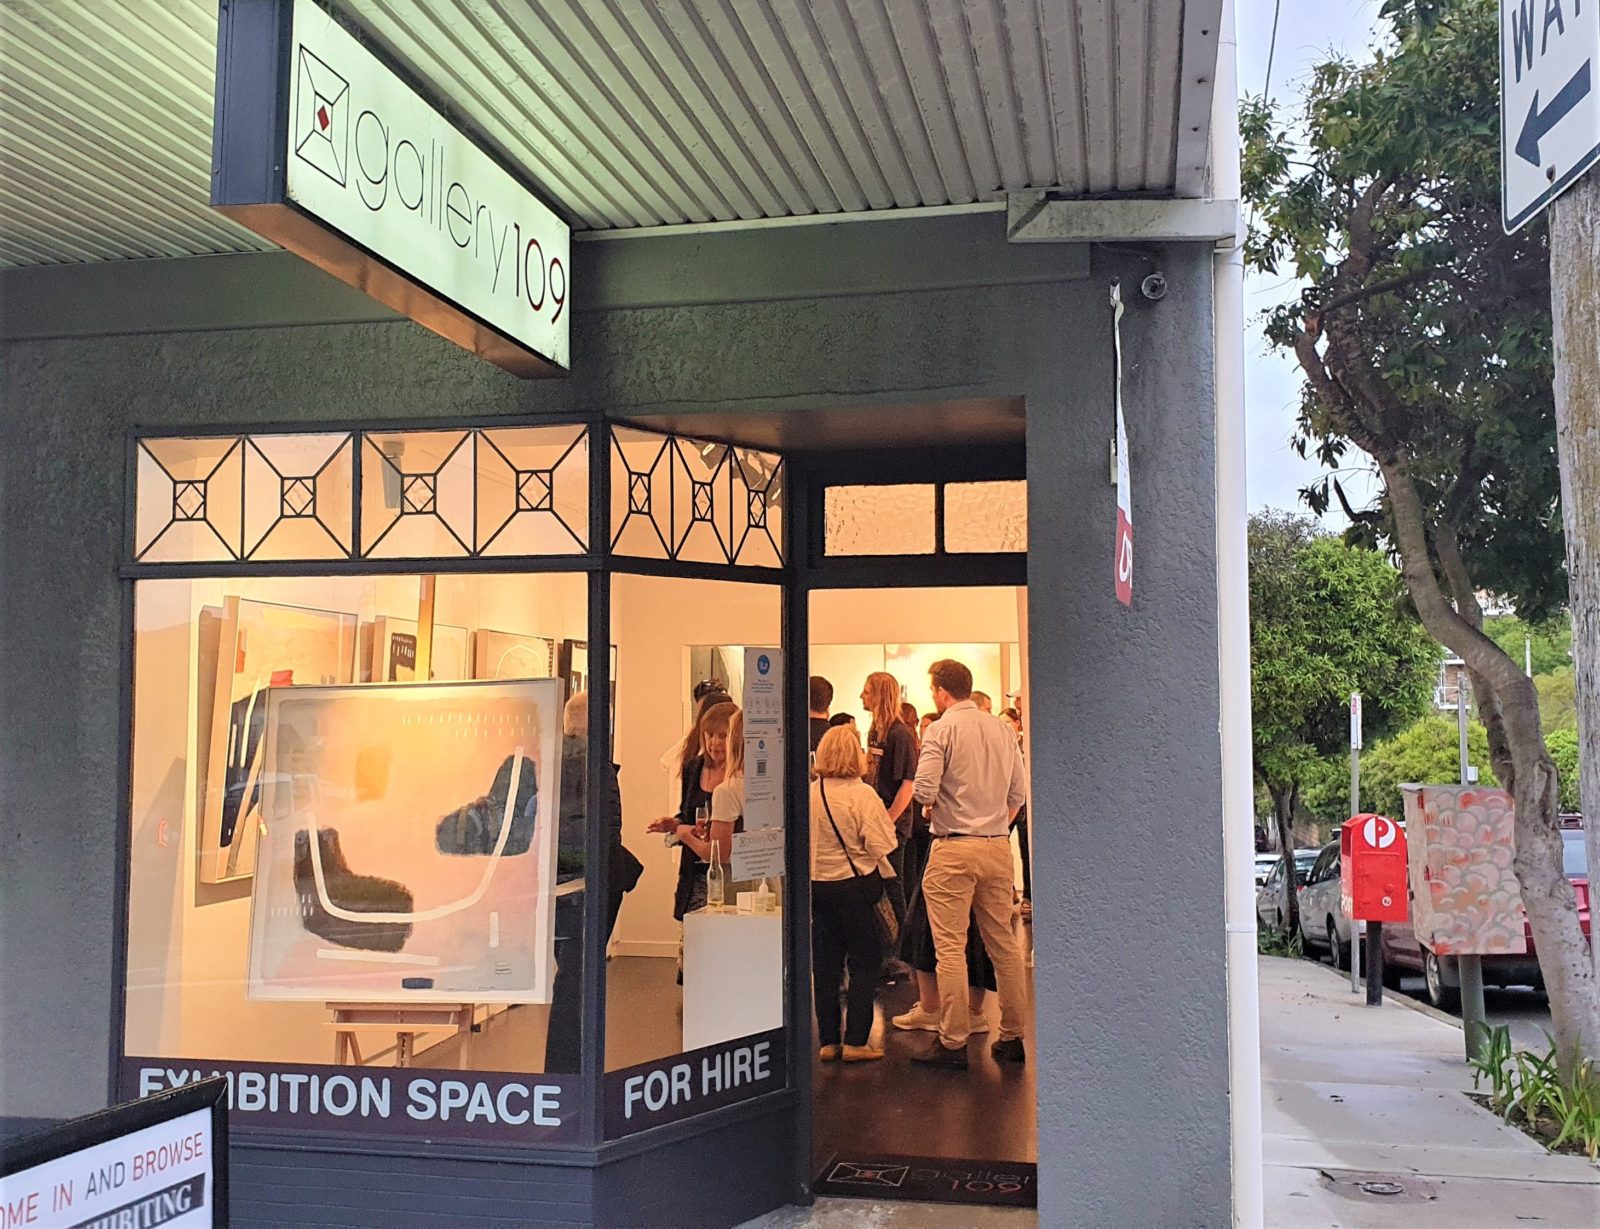 Gallery shopfront on Sydney Rd